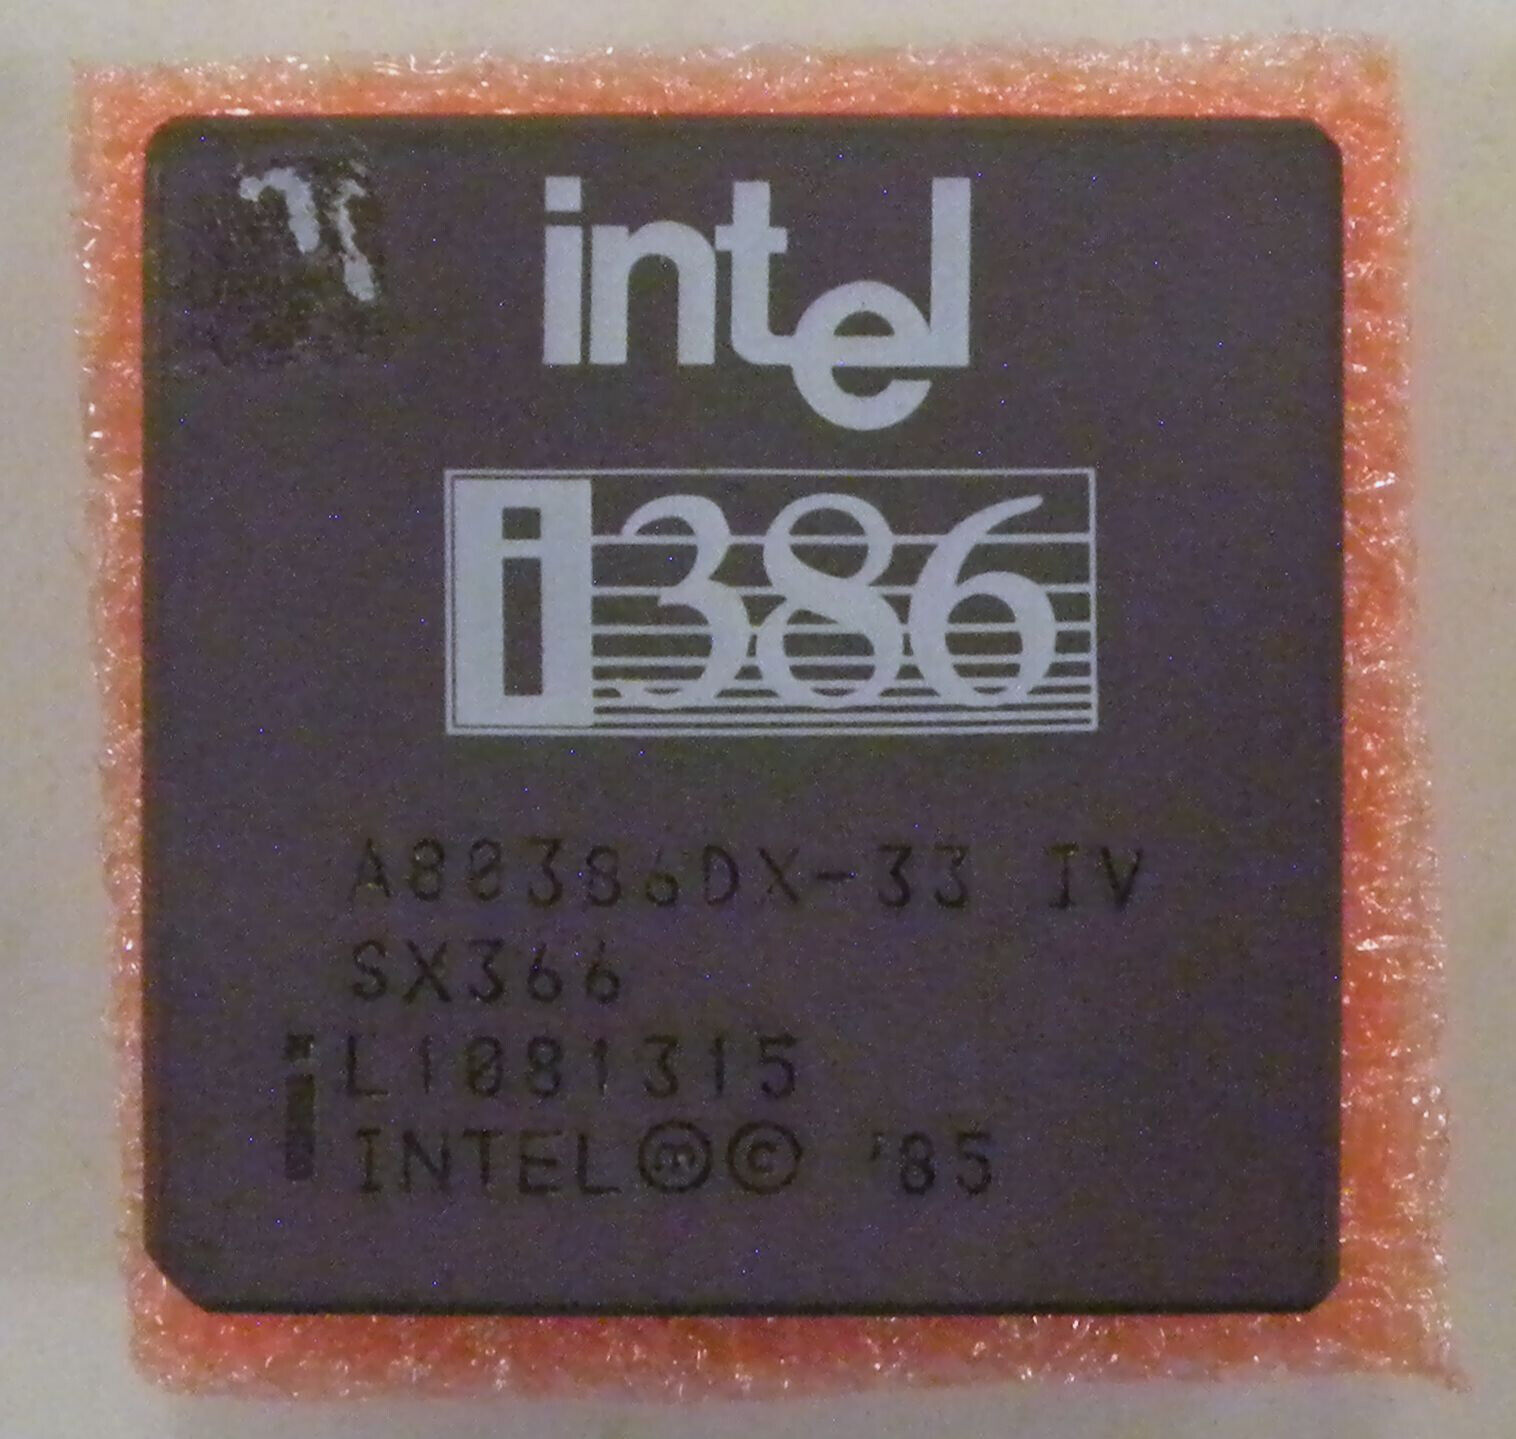 Intel 386DX-33 IV SX366 Ceramic CPU '85 A80386-DX-33 I386   